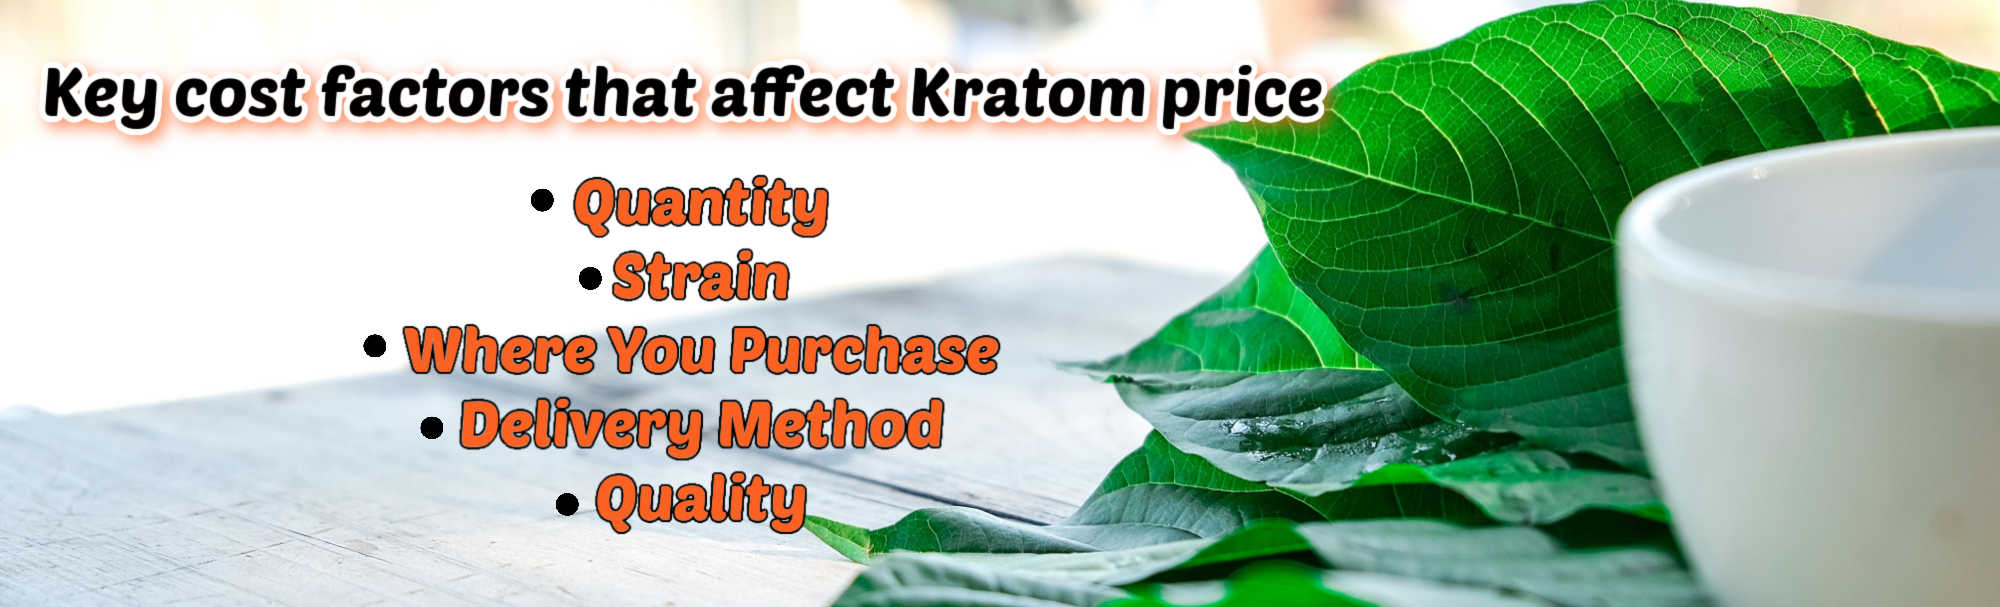 image of key factors that affect kratom price